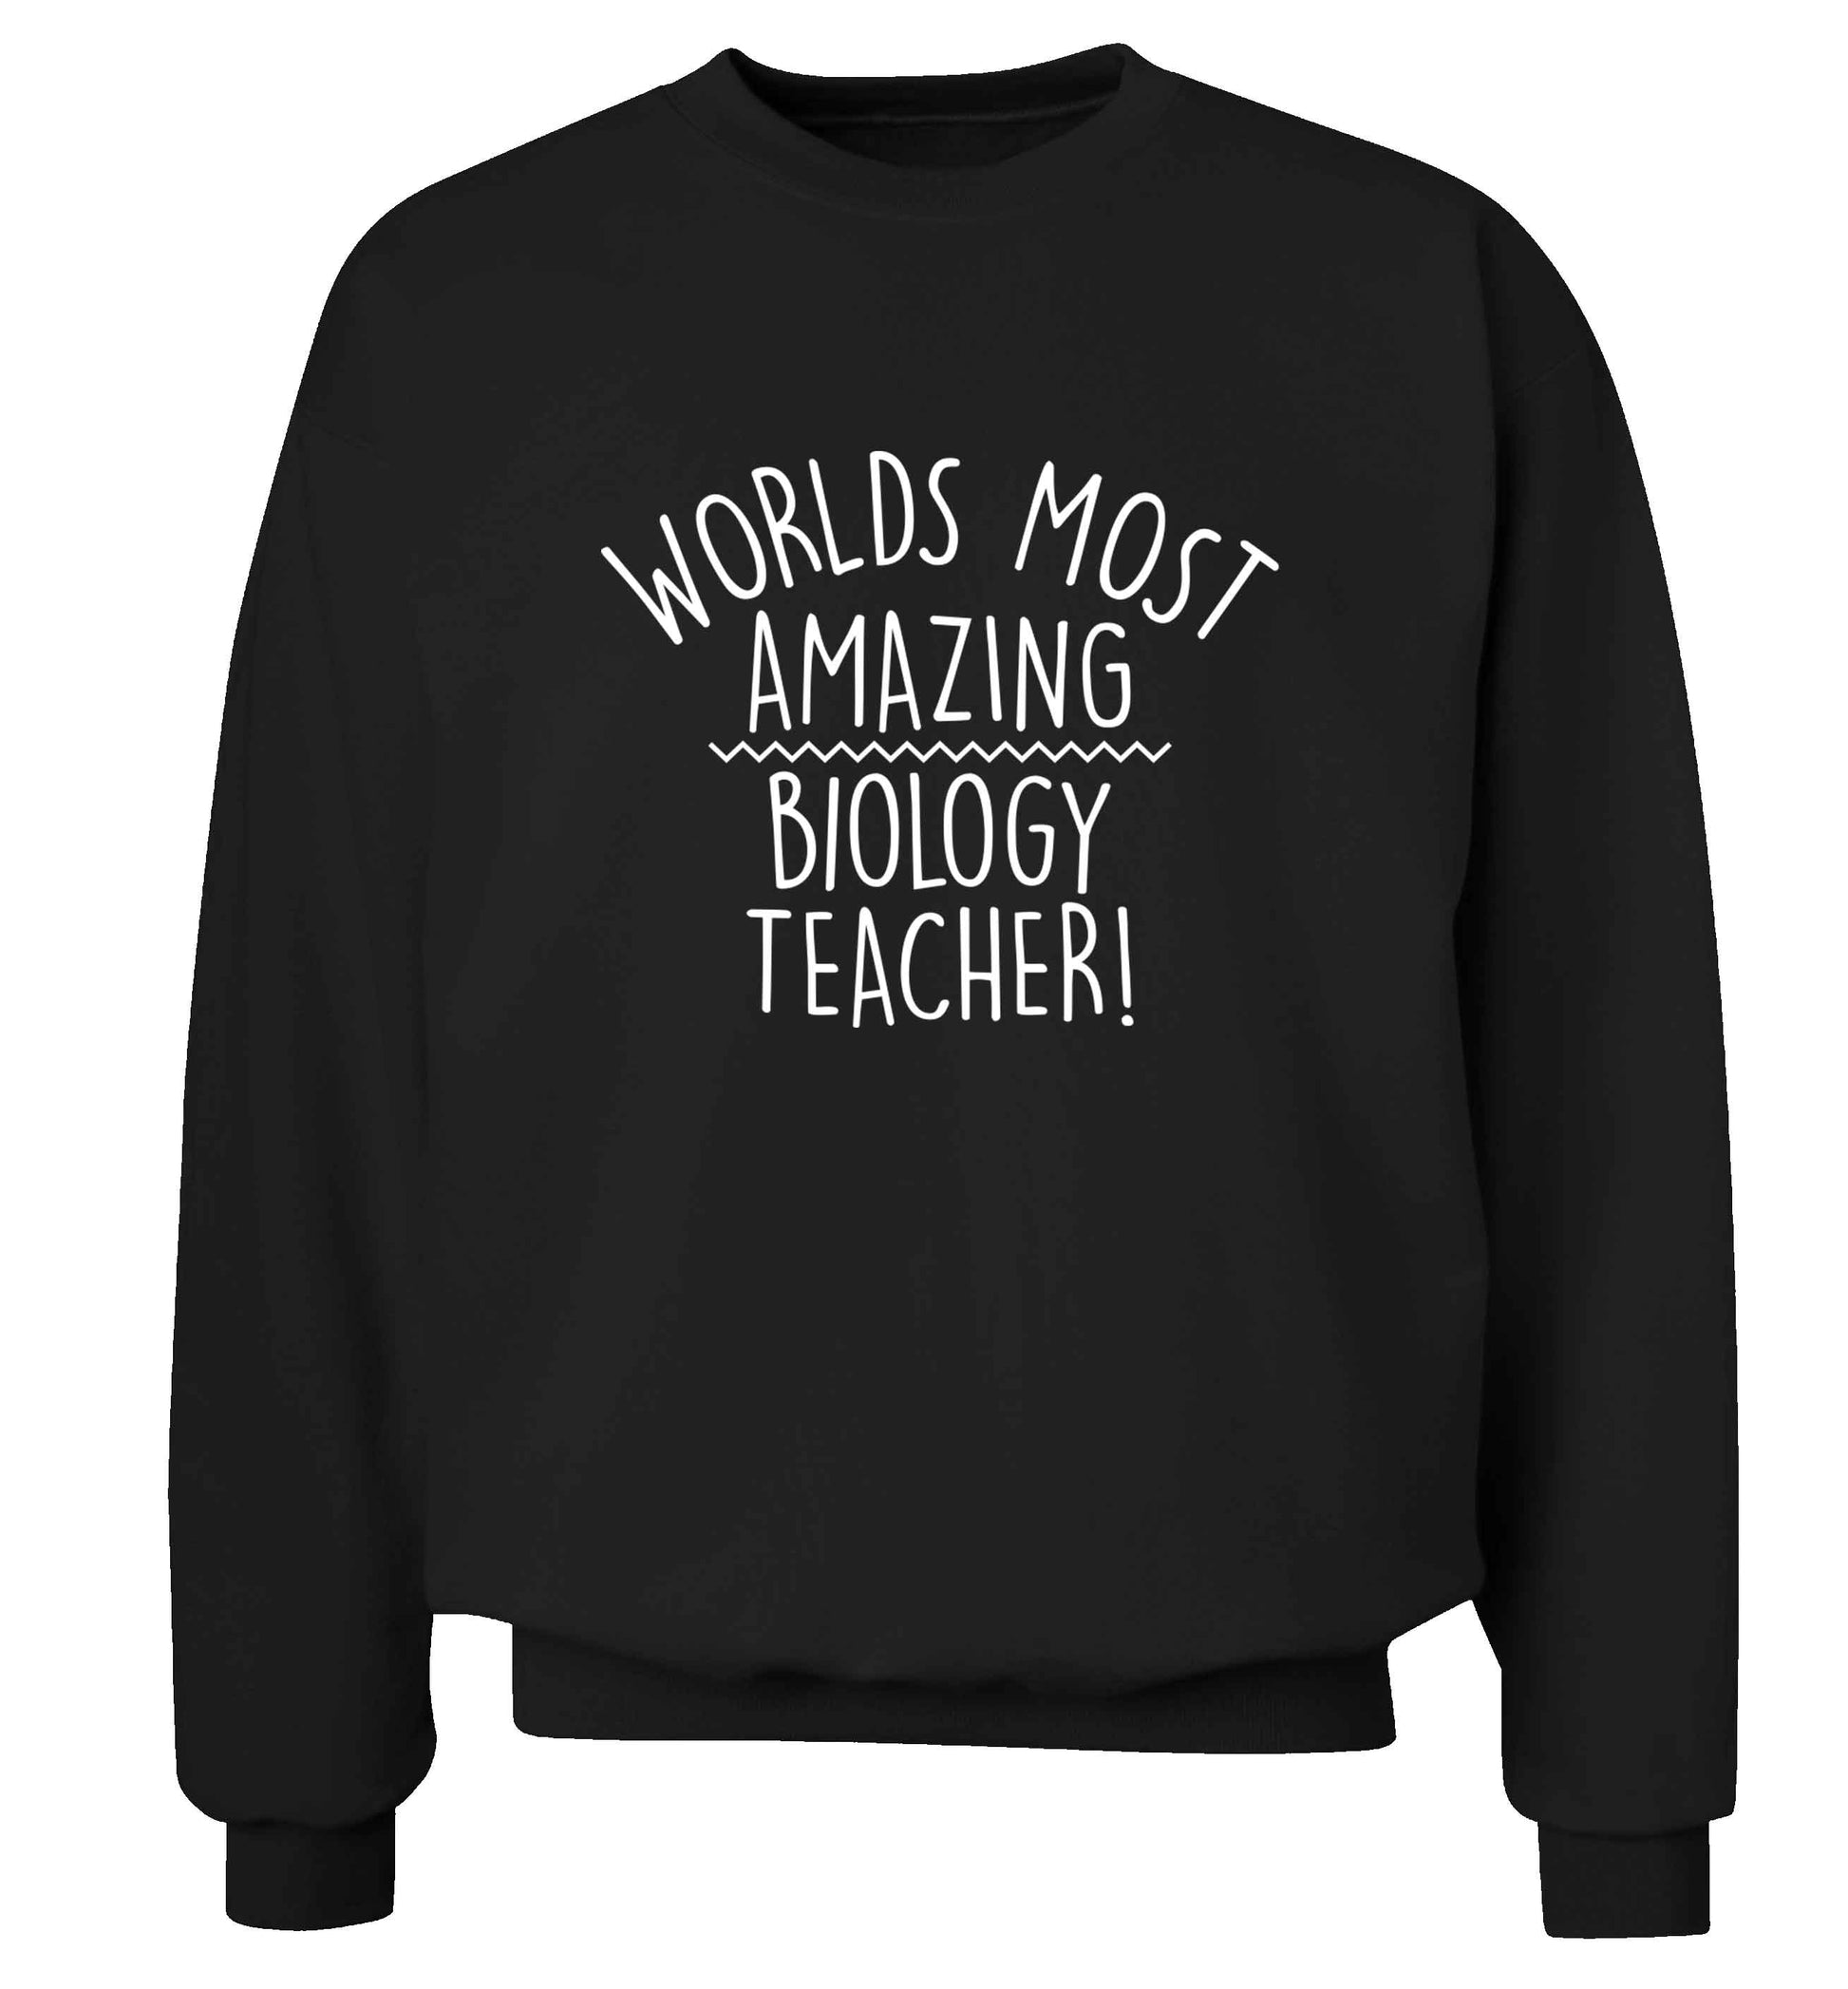 Worlds most amazing biology teacher adult's unisex black sweater 2XL